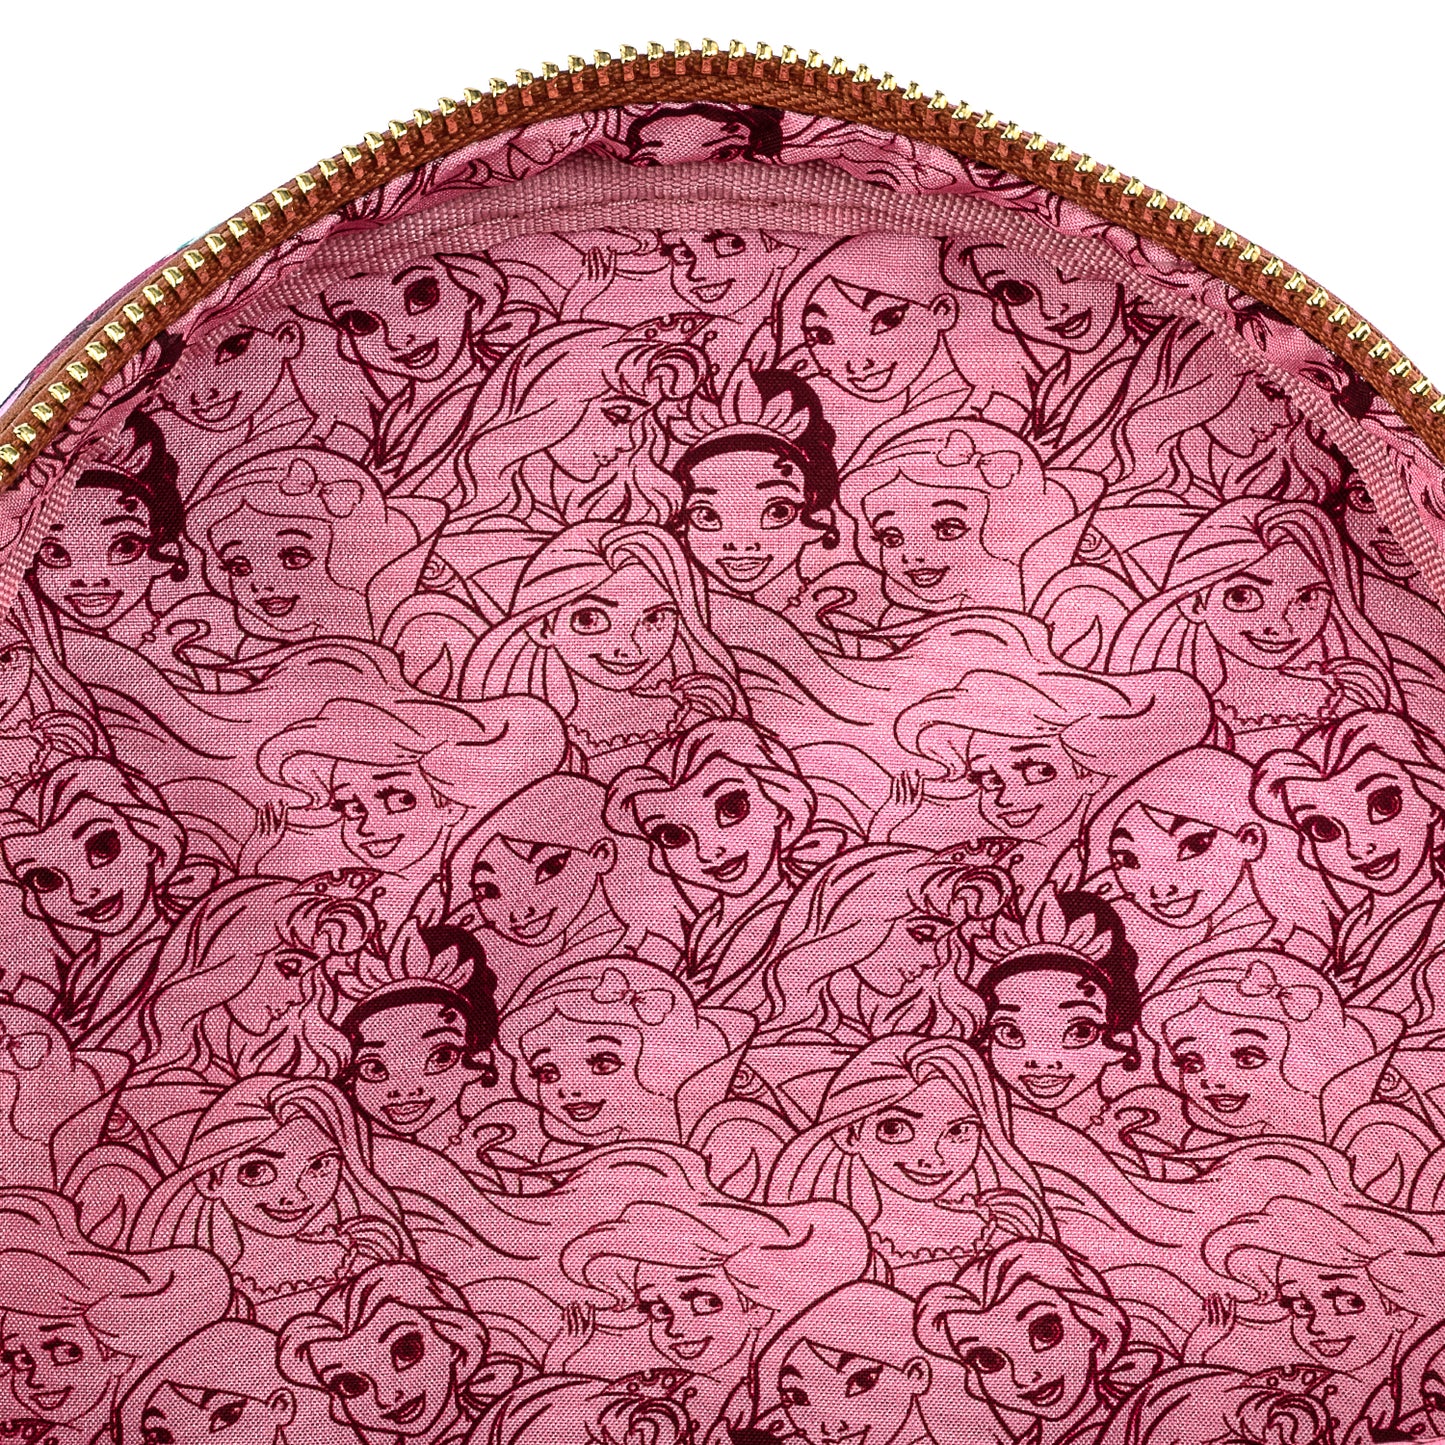 Disney x Loungefly  Disney Princess Floral AOP Mini Backpack